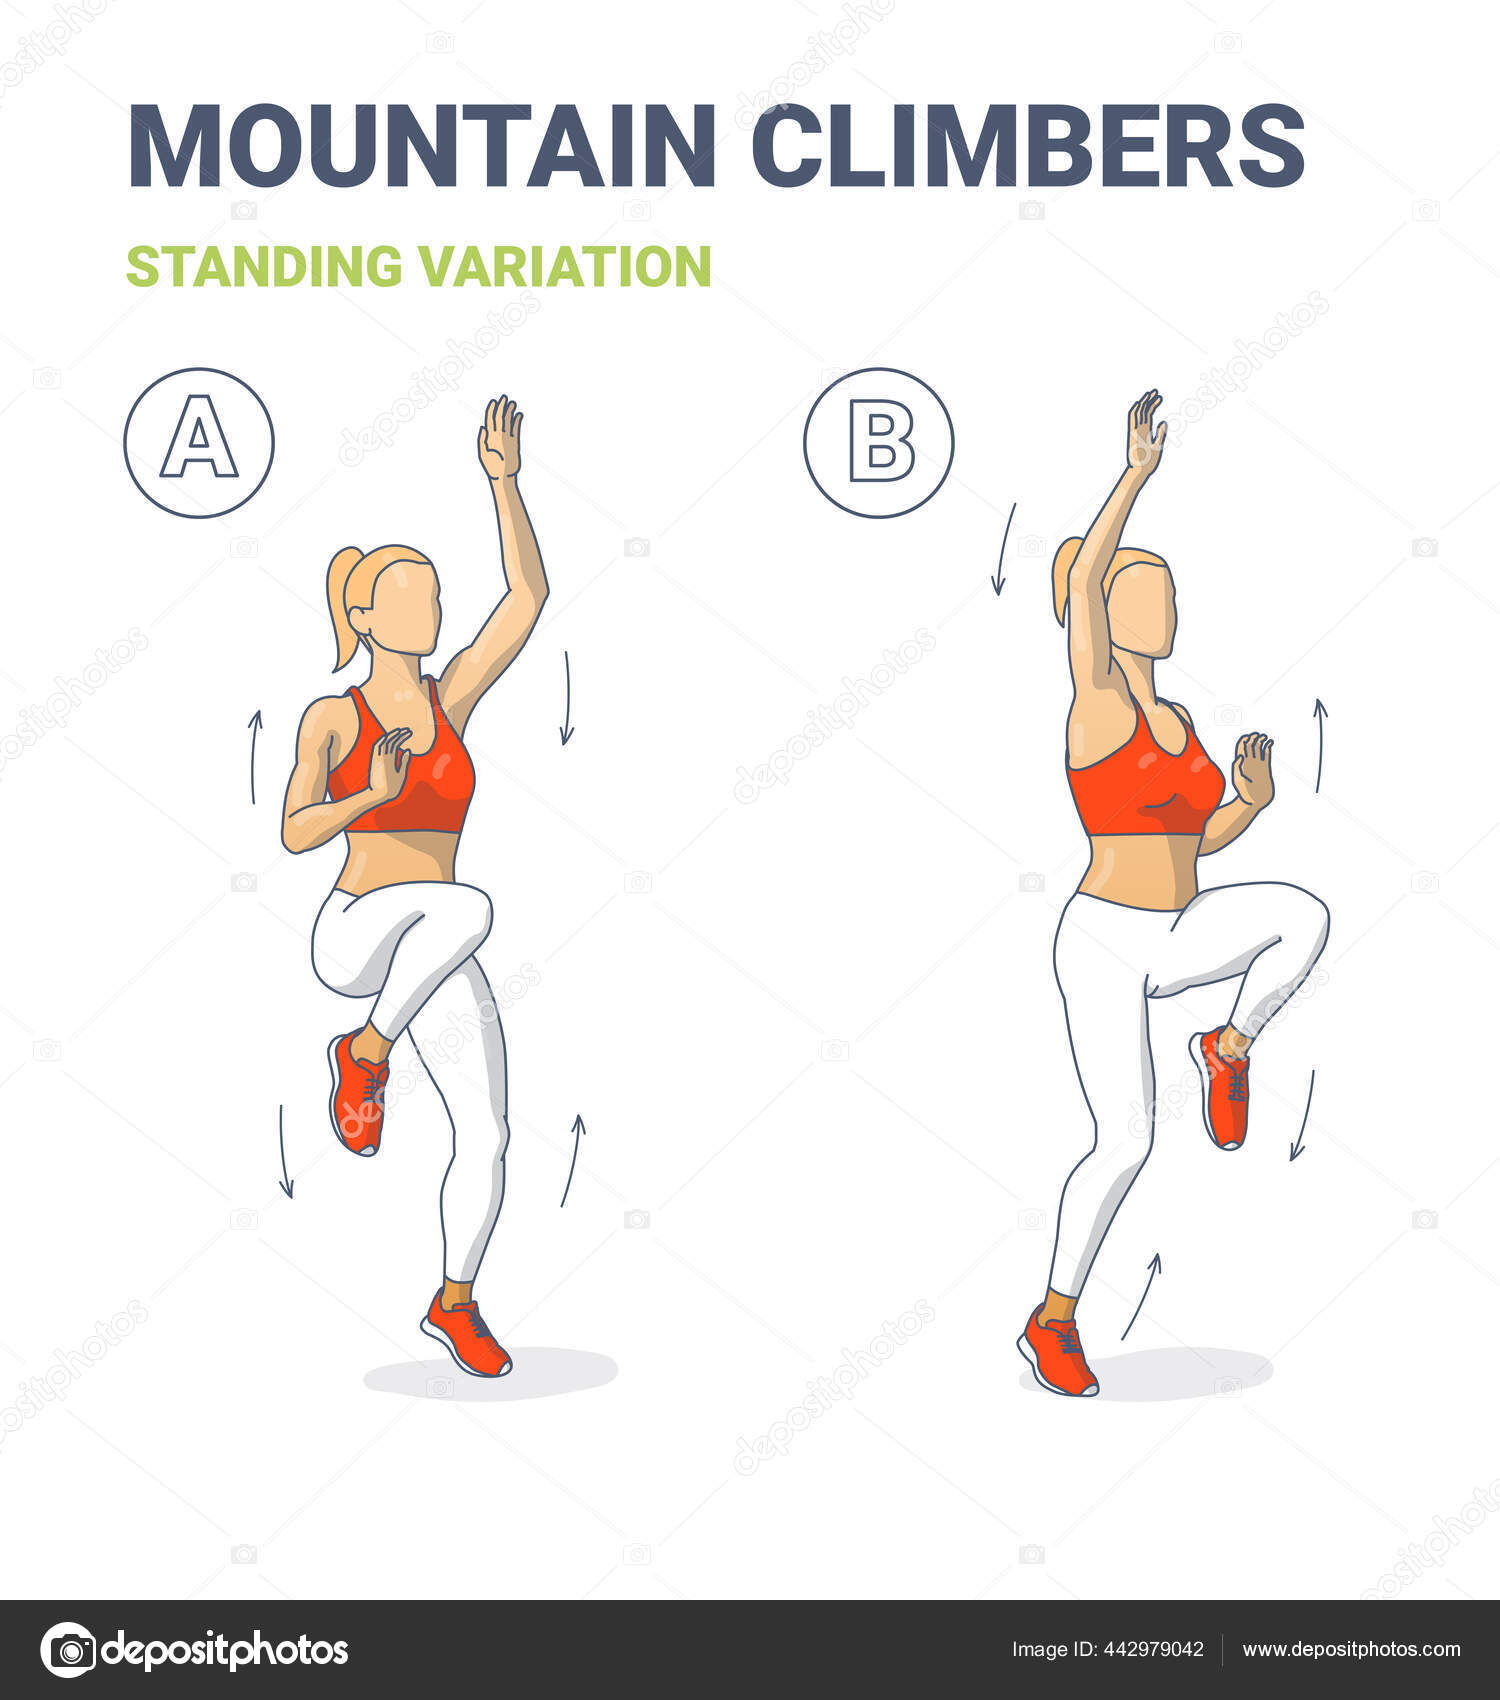 https://st2.depositphotos.com/22663846/44297/v/1600/depositphotos_442979042-stock-illustration-standing-mountain-climbers-girl-home.jpg